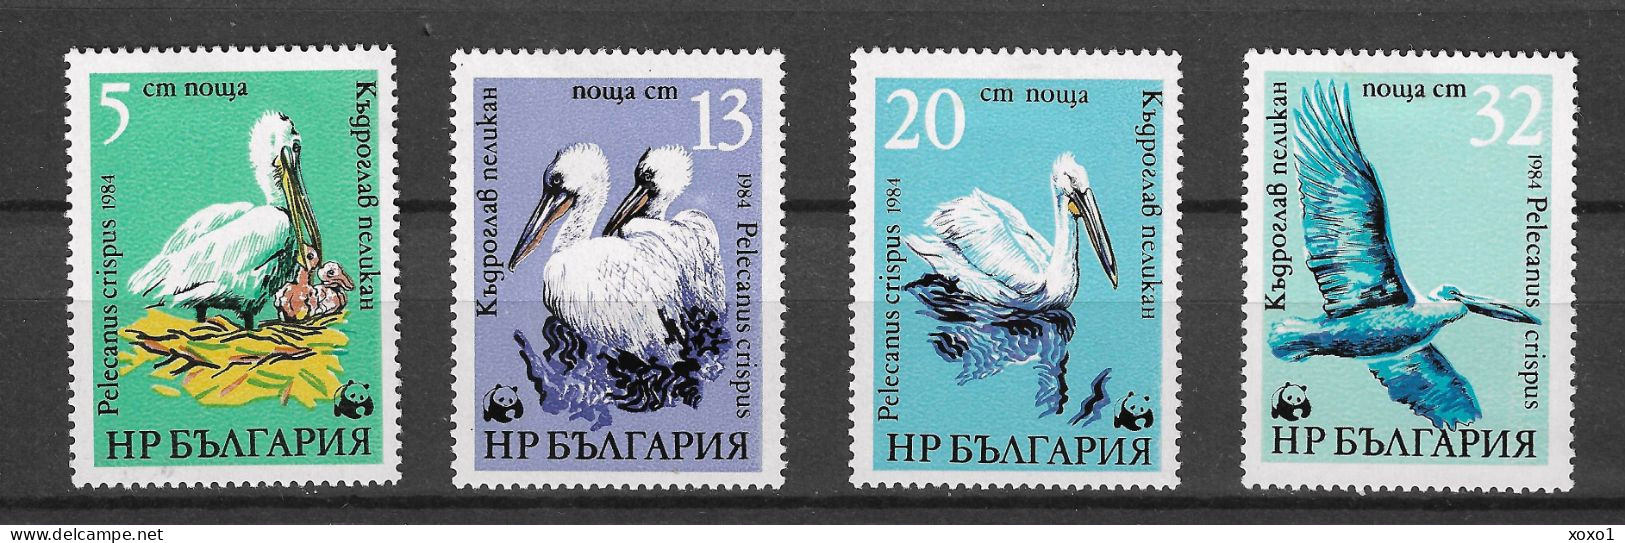 Bulgaria 1984 MiNr. 3303 - 3306 Bulgarien Birds Dalmatian Pelicans WWF 4v MLH * 6.50 € - Pelikanen